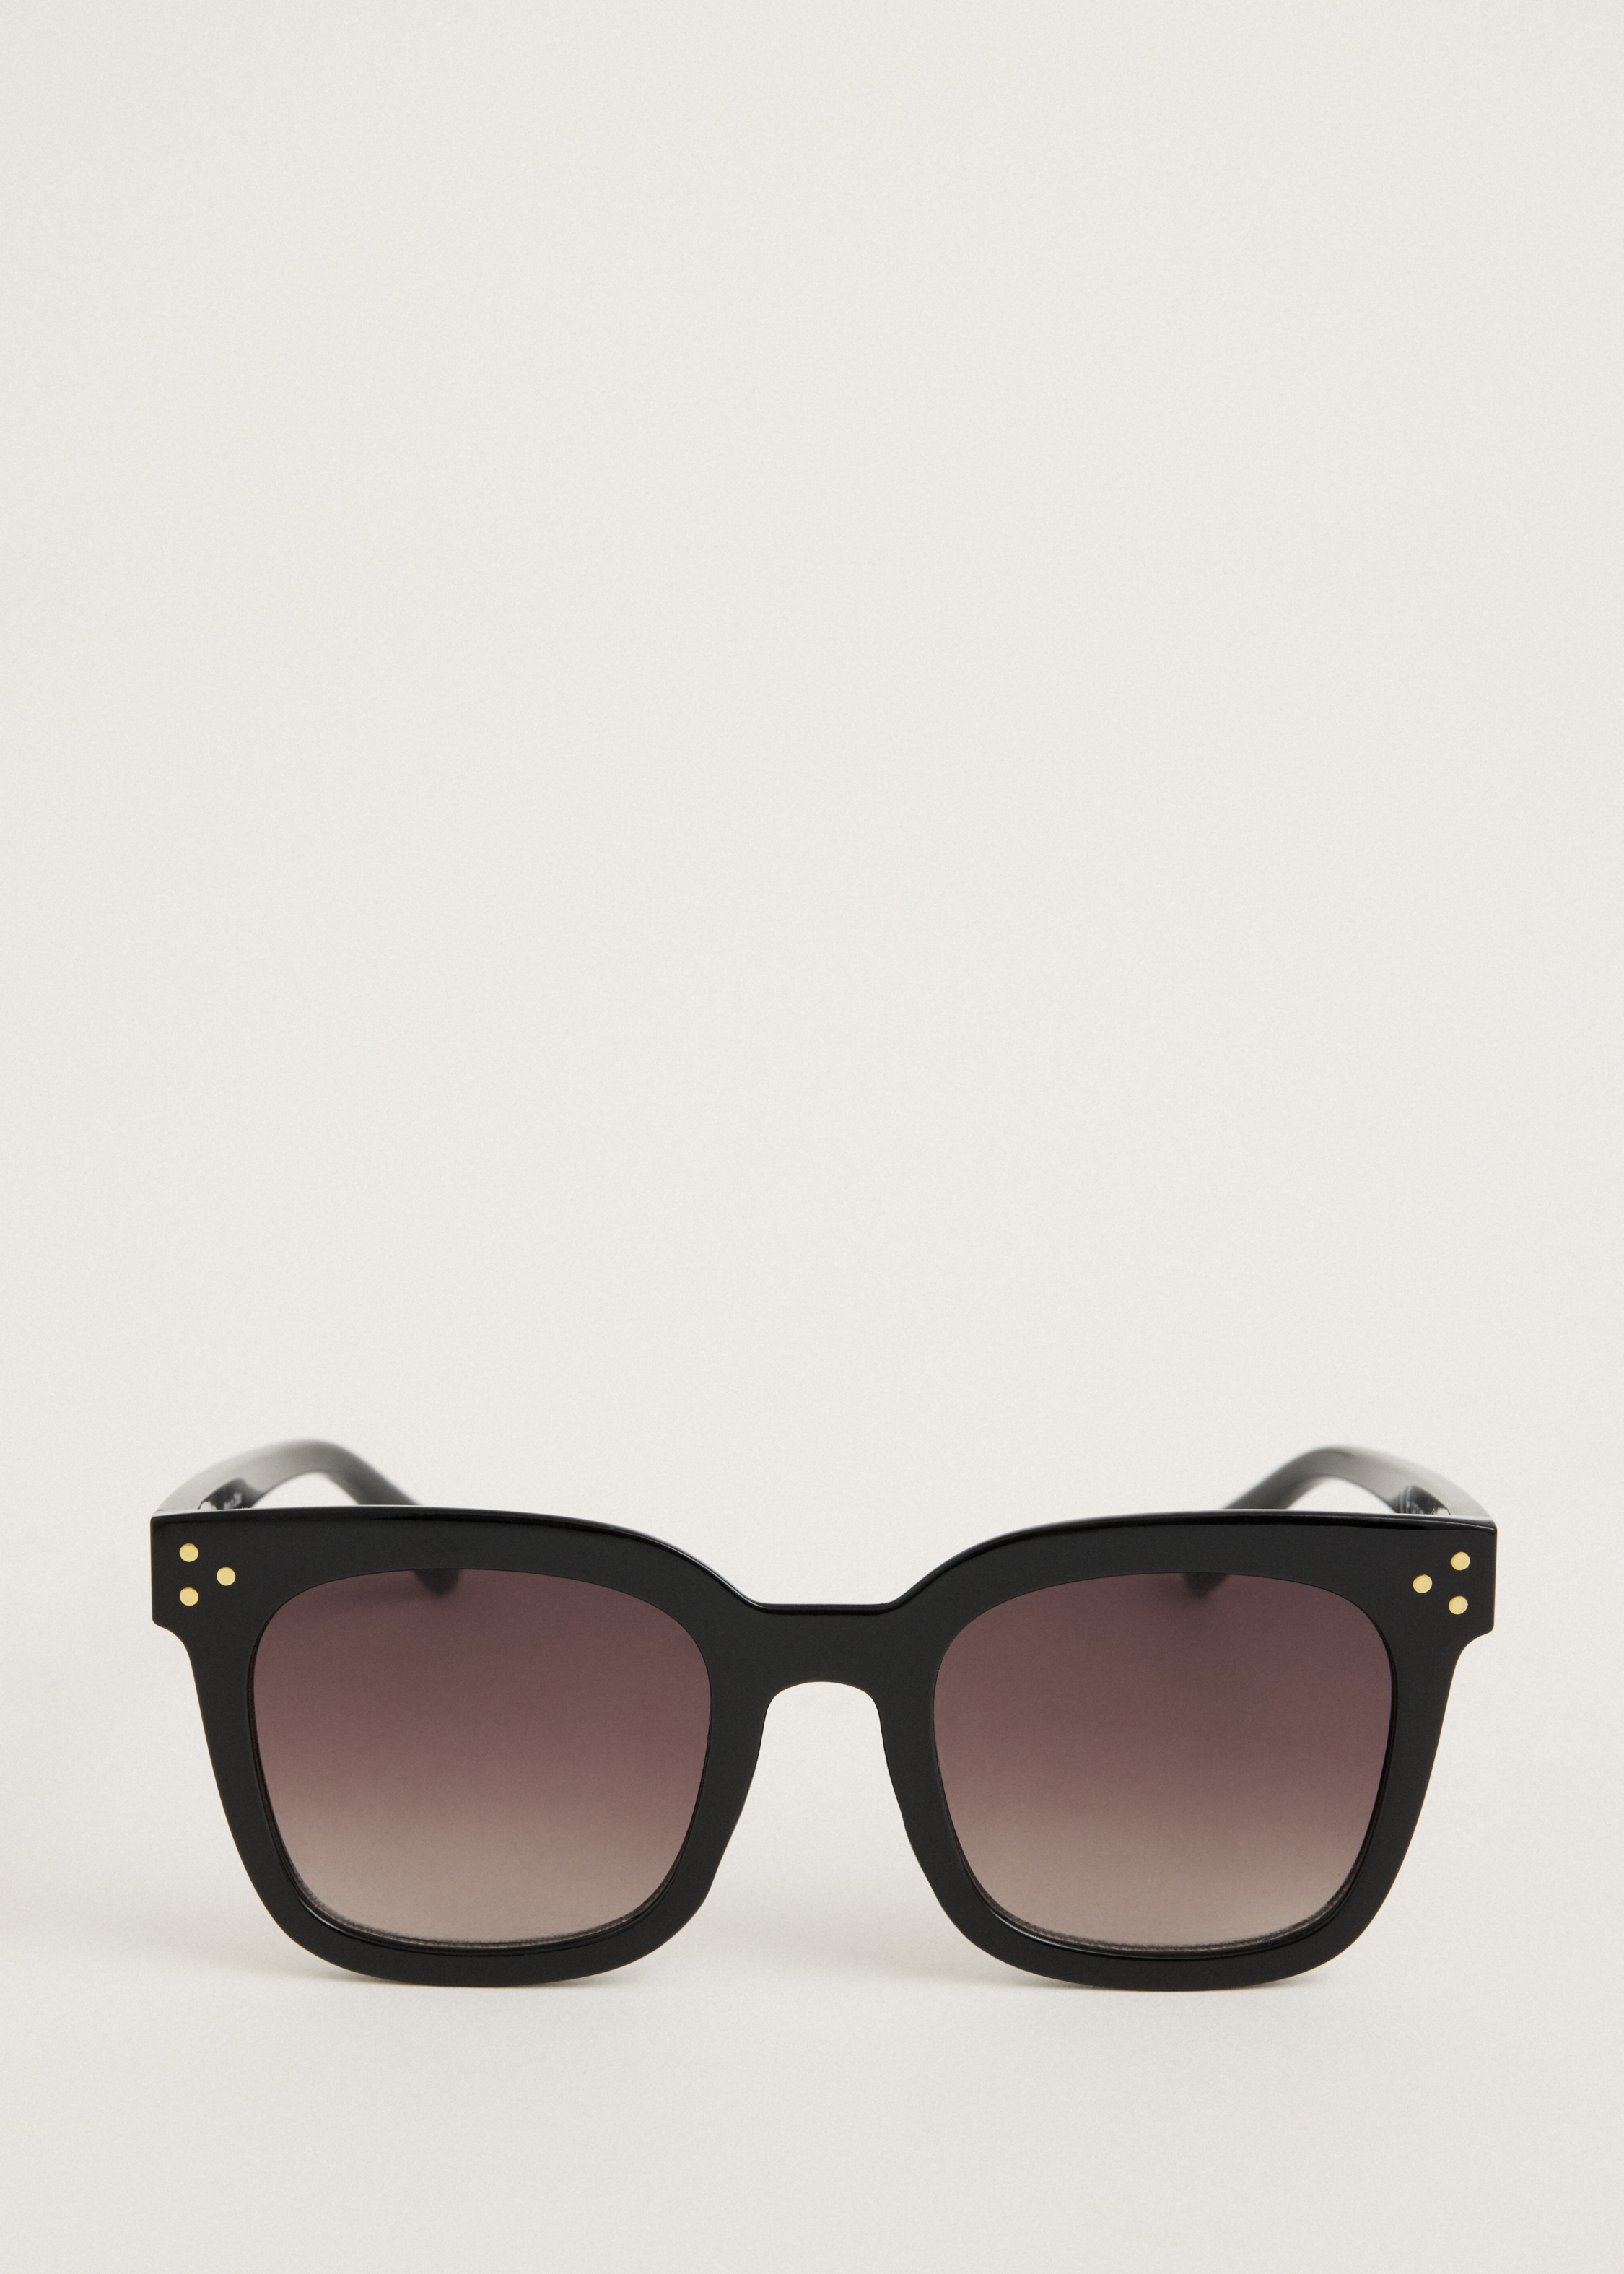 Uitbreiden Ondergeschikt Conflict Gold Detail Sunglasses zwart (ZWART) | The Sting